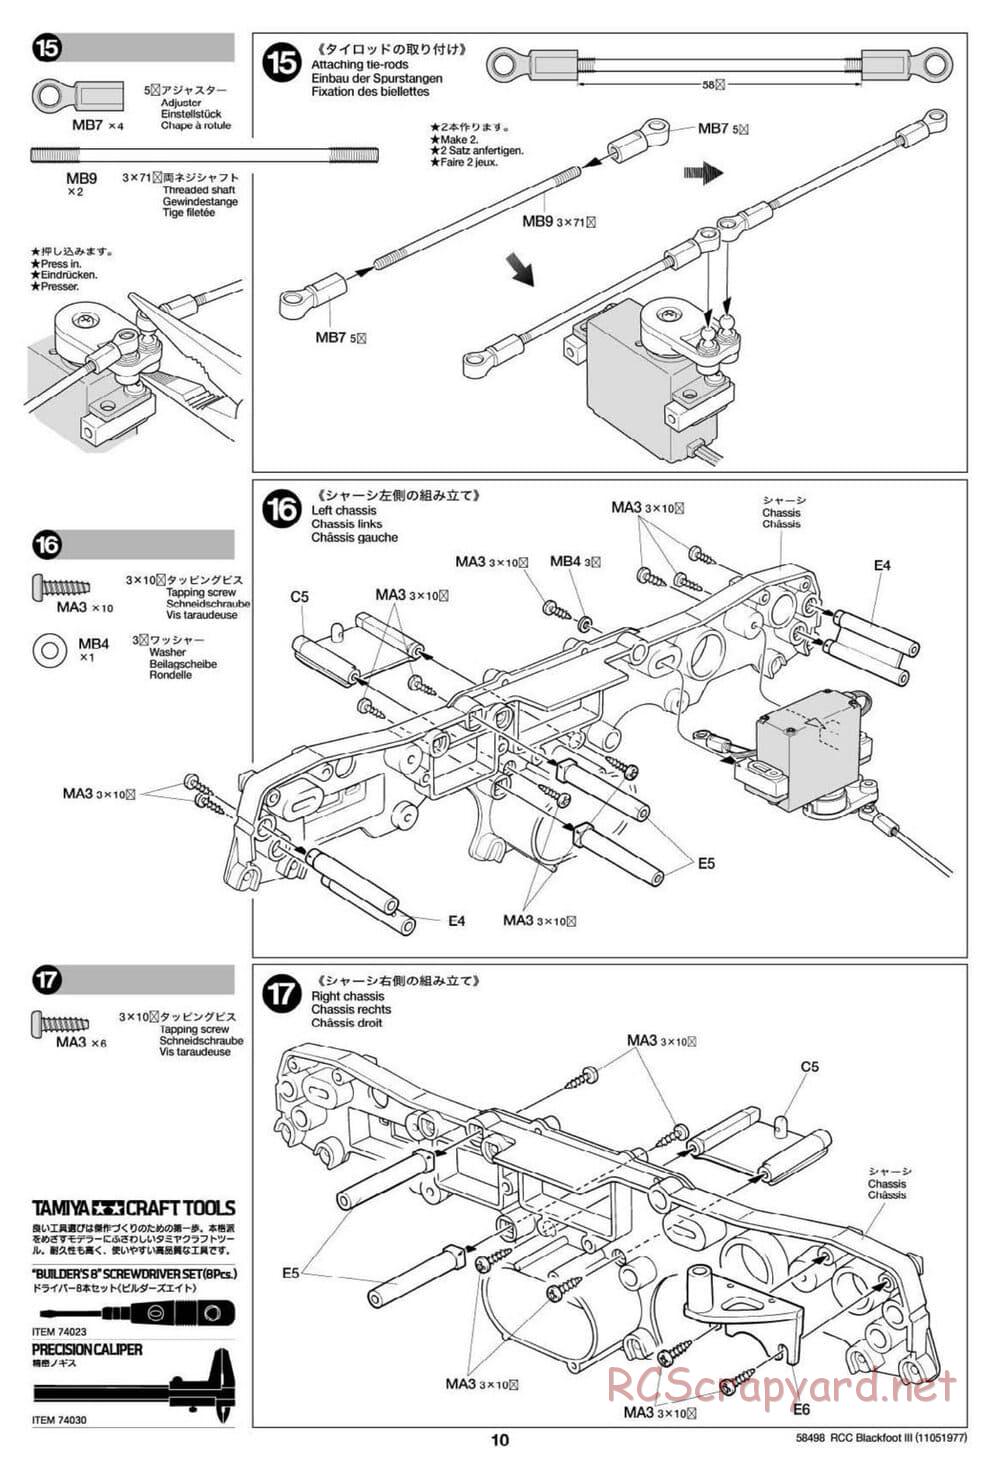 Tamiya - Blackfoot III - WT-01 Chassis - Manual - Page 10